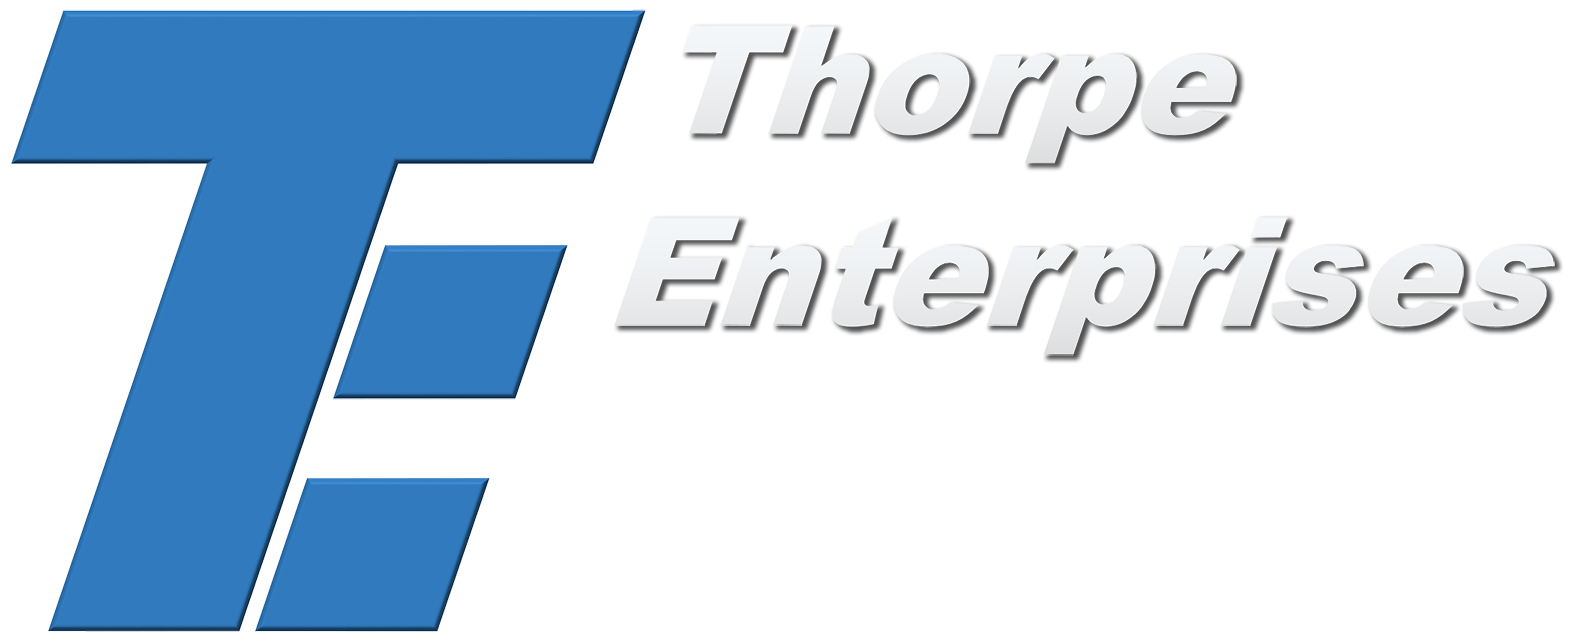 Thorpe Enterprises Atlanta, GA